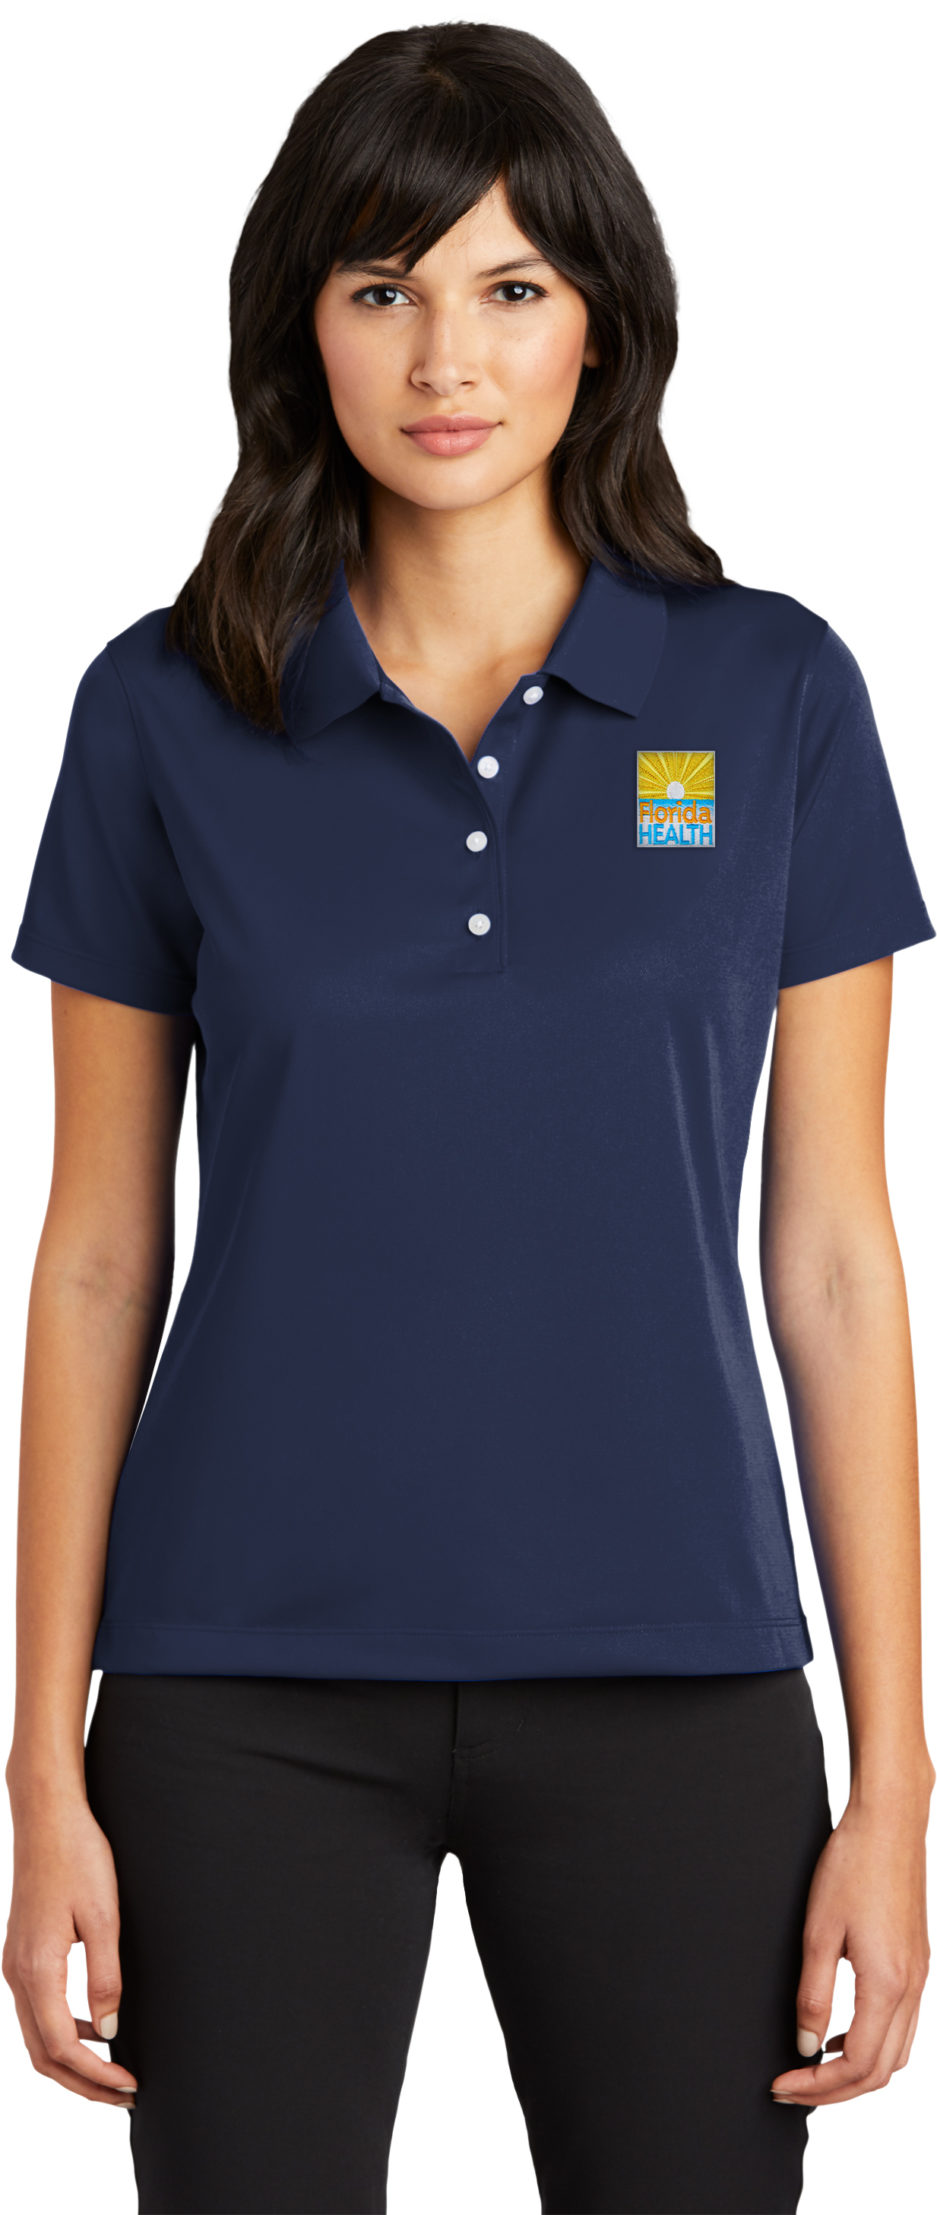 Basic - Shirts - Dri-FIT Health 203697 Apparel DOH Department - Ladies Tech of Florida Nike Polo